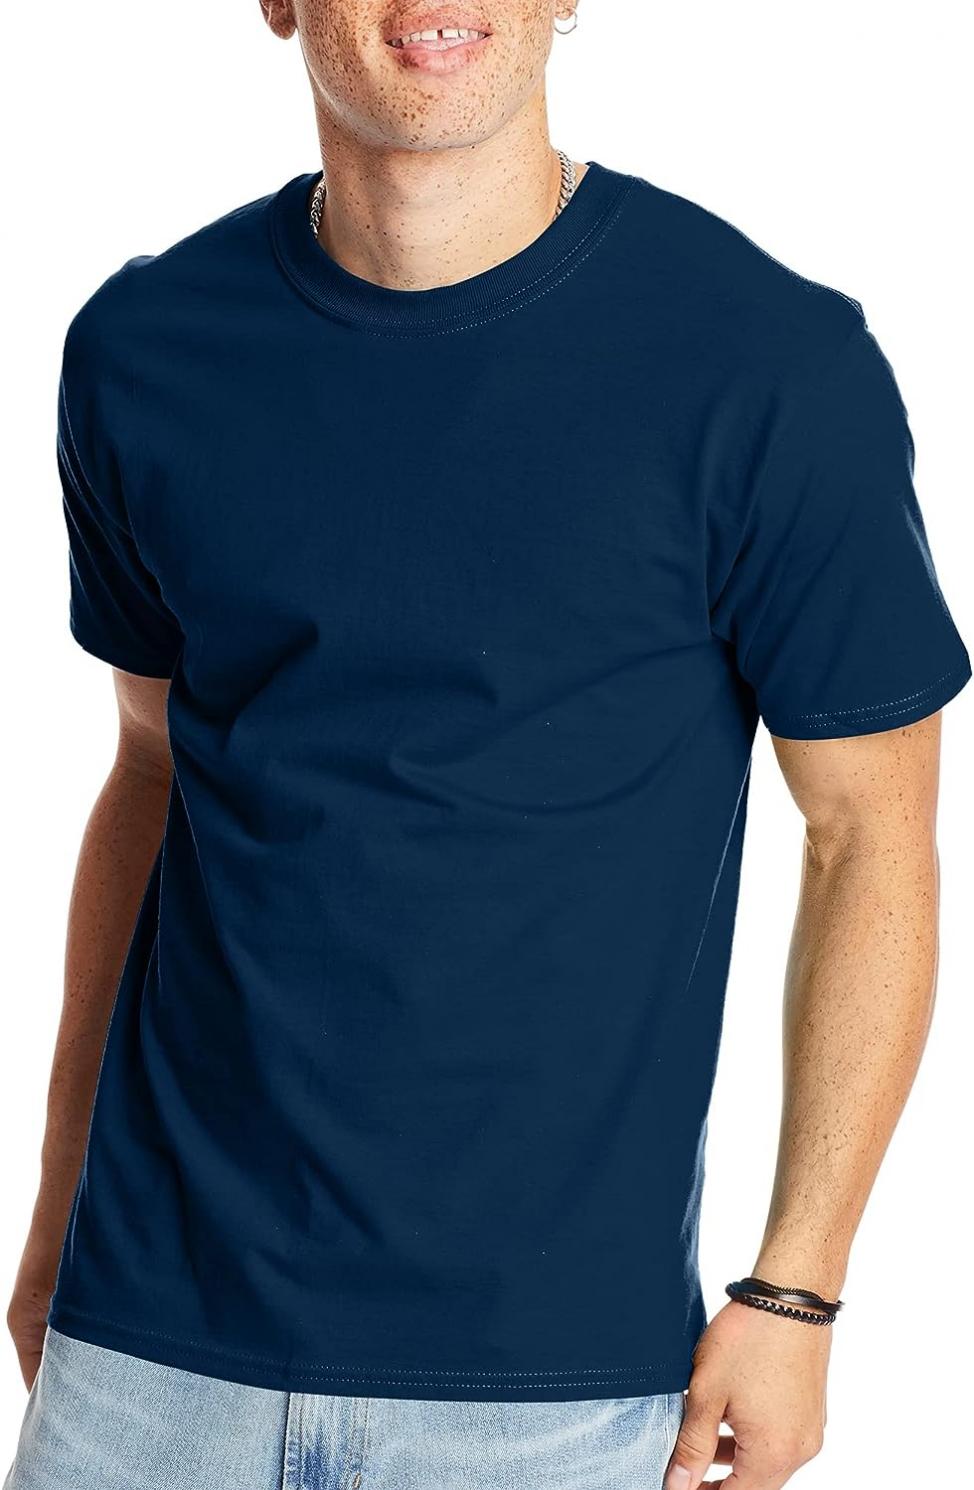 Hanes Men's T-Shirts, X-Temp Men's Performance T-Shirt Pack, Moisture-Wicking T-Shirts, Cotton Blend Tees, 2-Pack